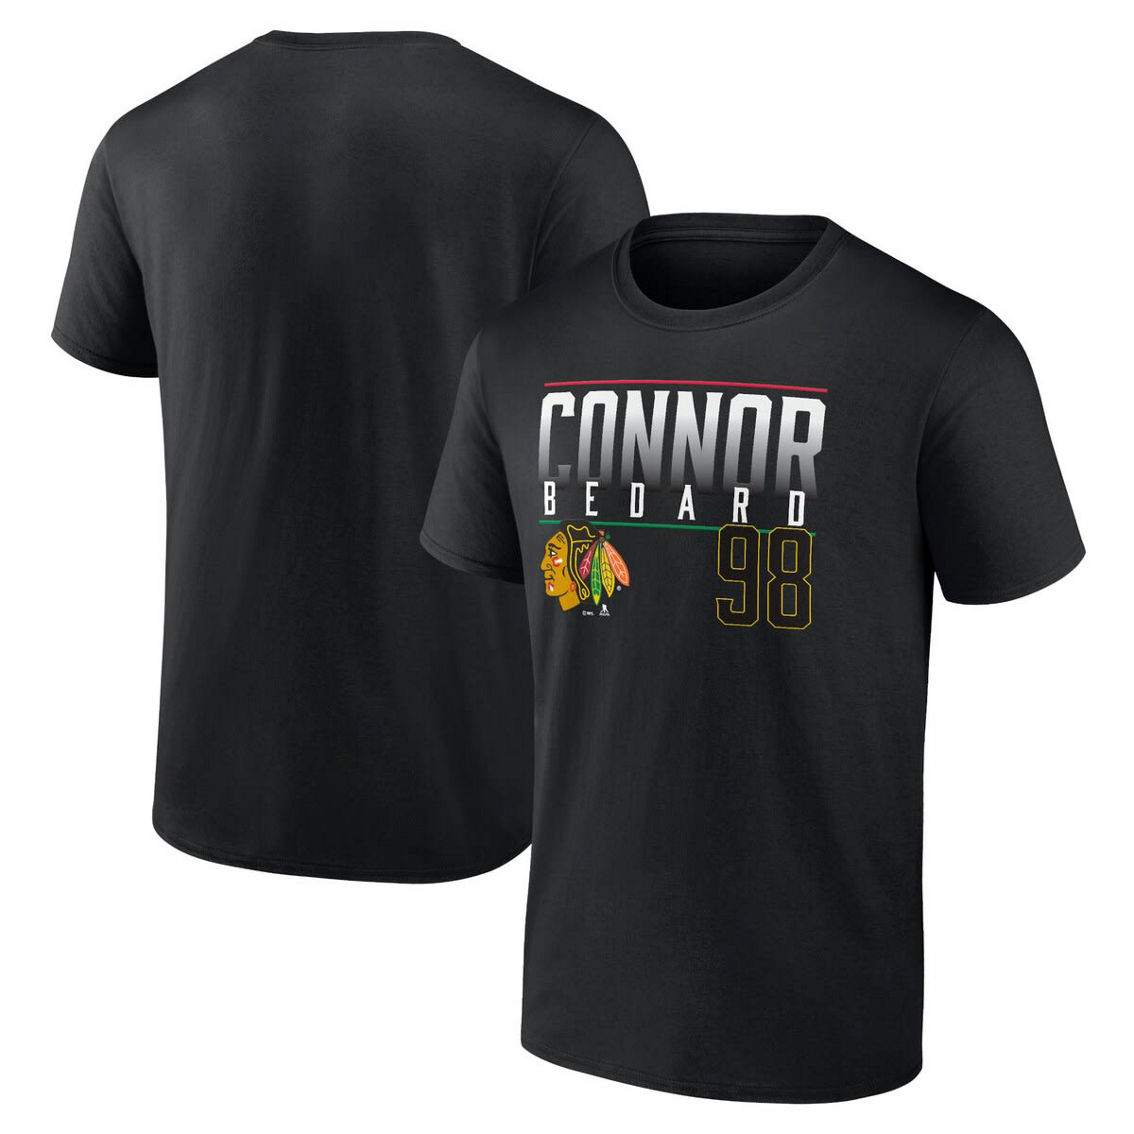 Fanatics Branded Men's Connor Bedard Black Chicago Blackhawks Name & Number T-Shirt - Image 2 of 4